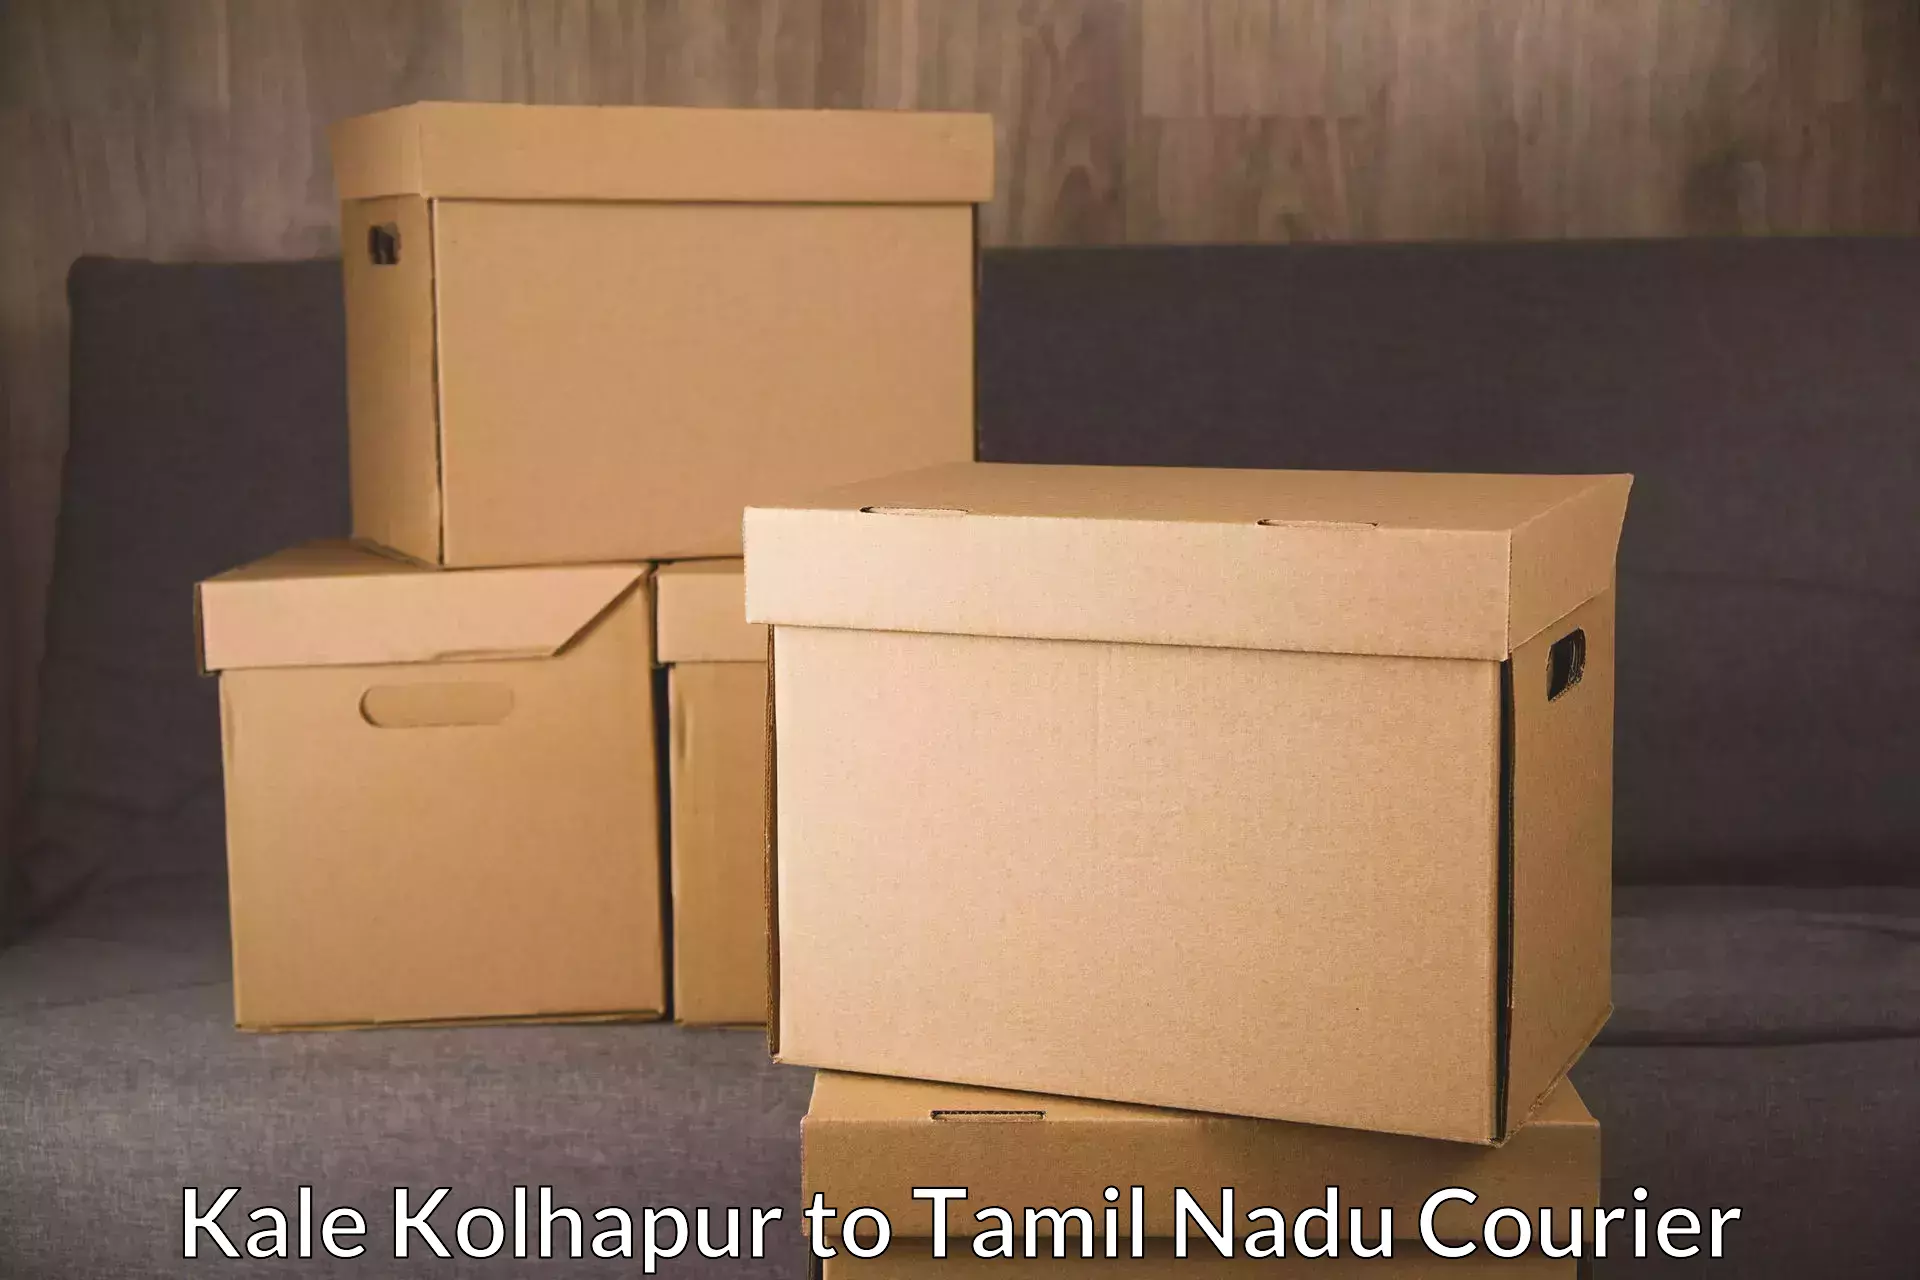 Express logistics providers Kale Kolhapur to Vriddhachalam